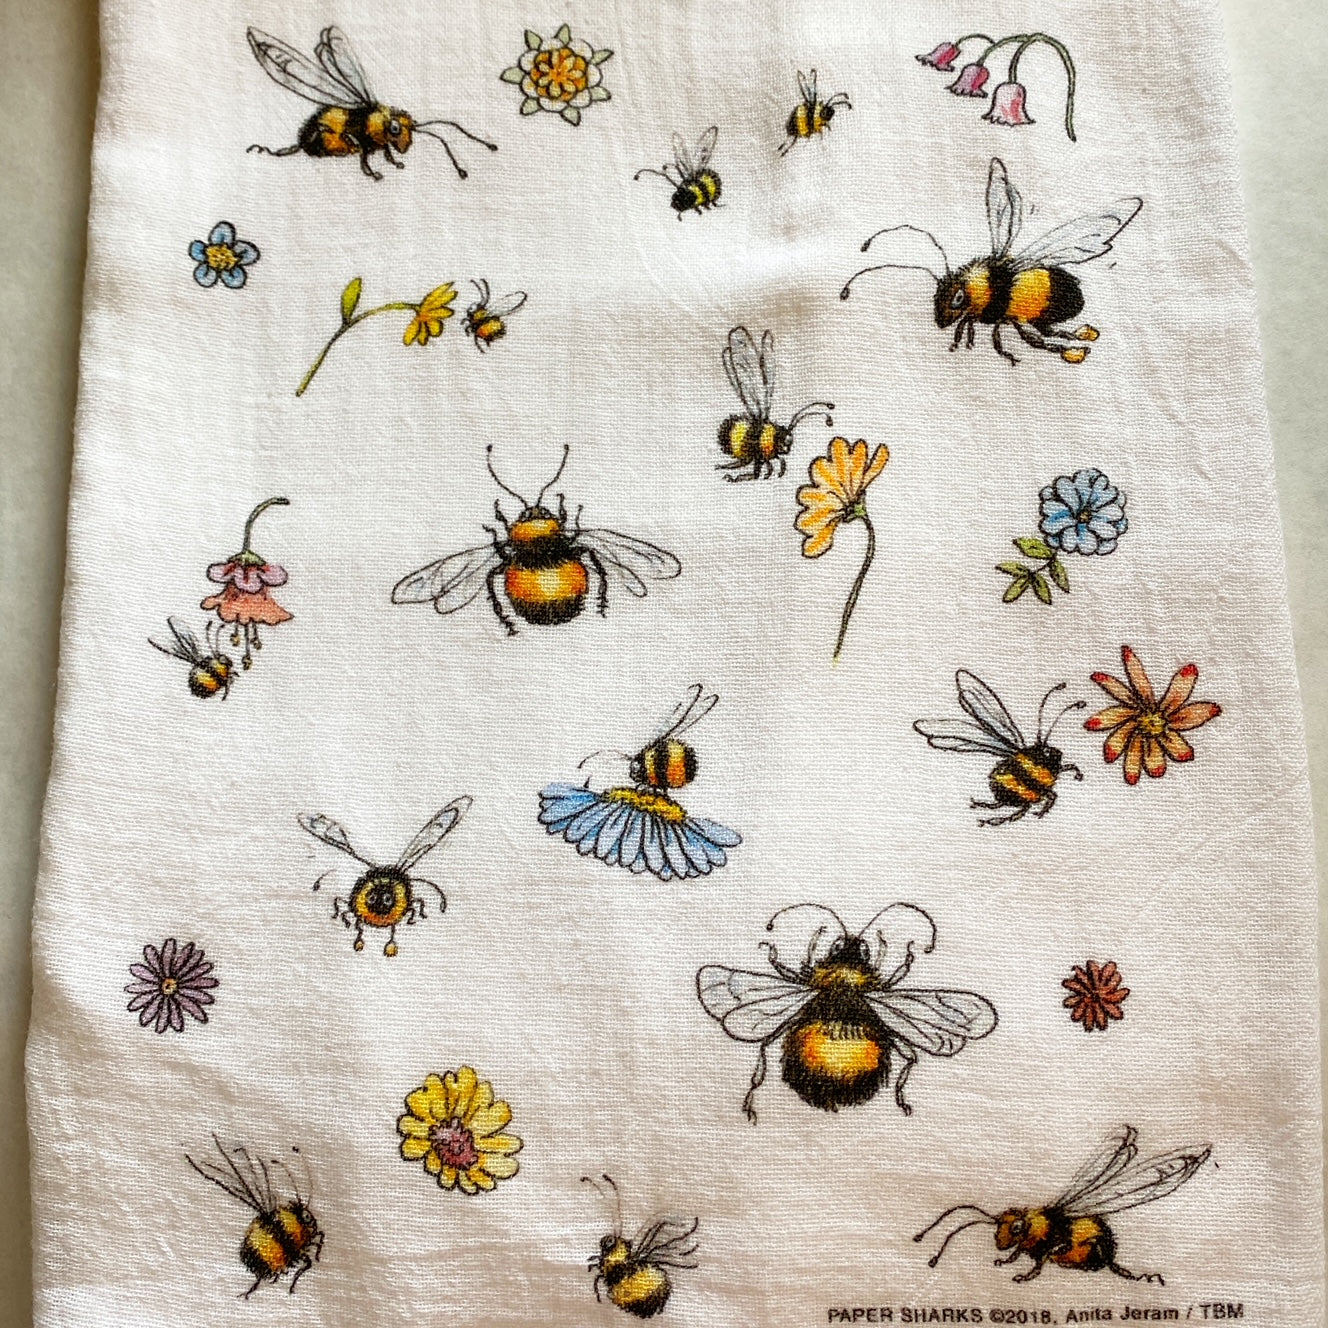 Bee Flour Sack Towel - center printed